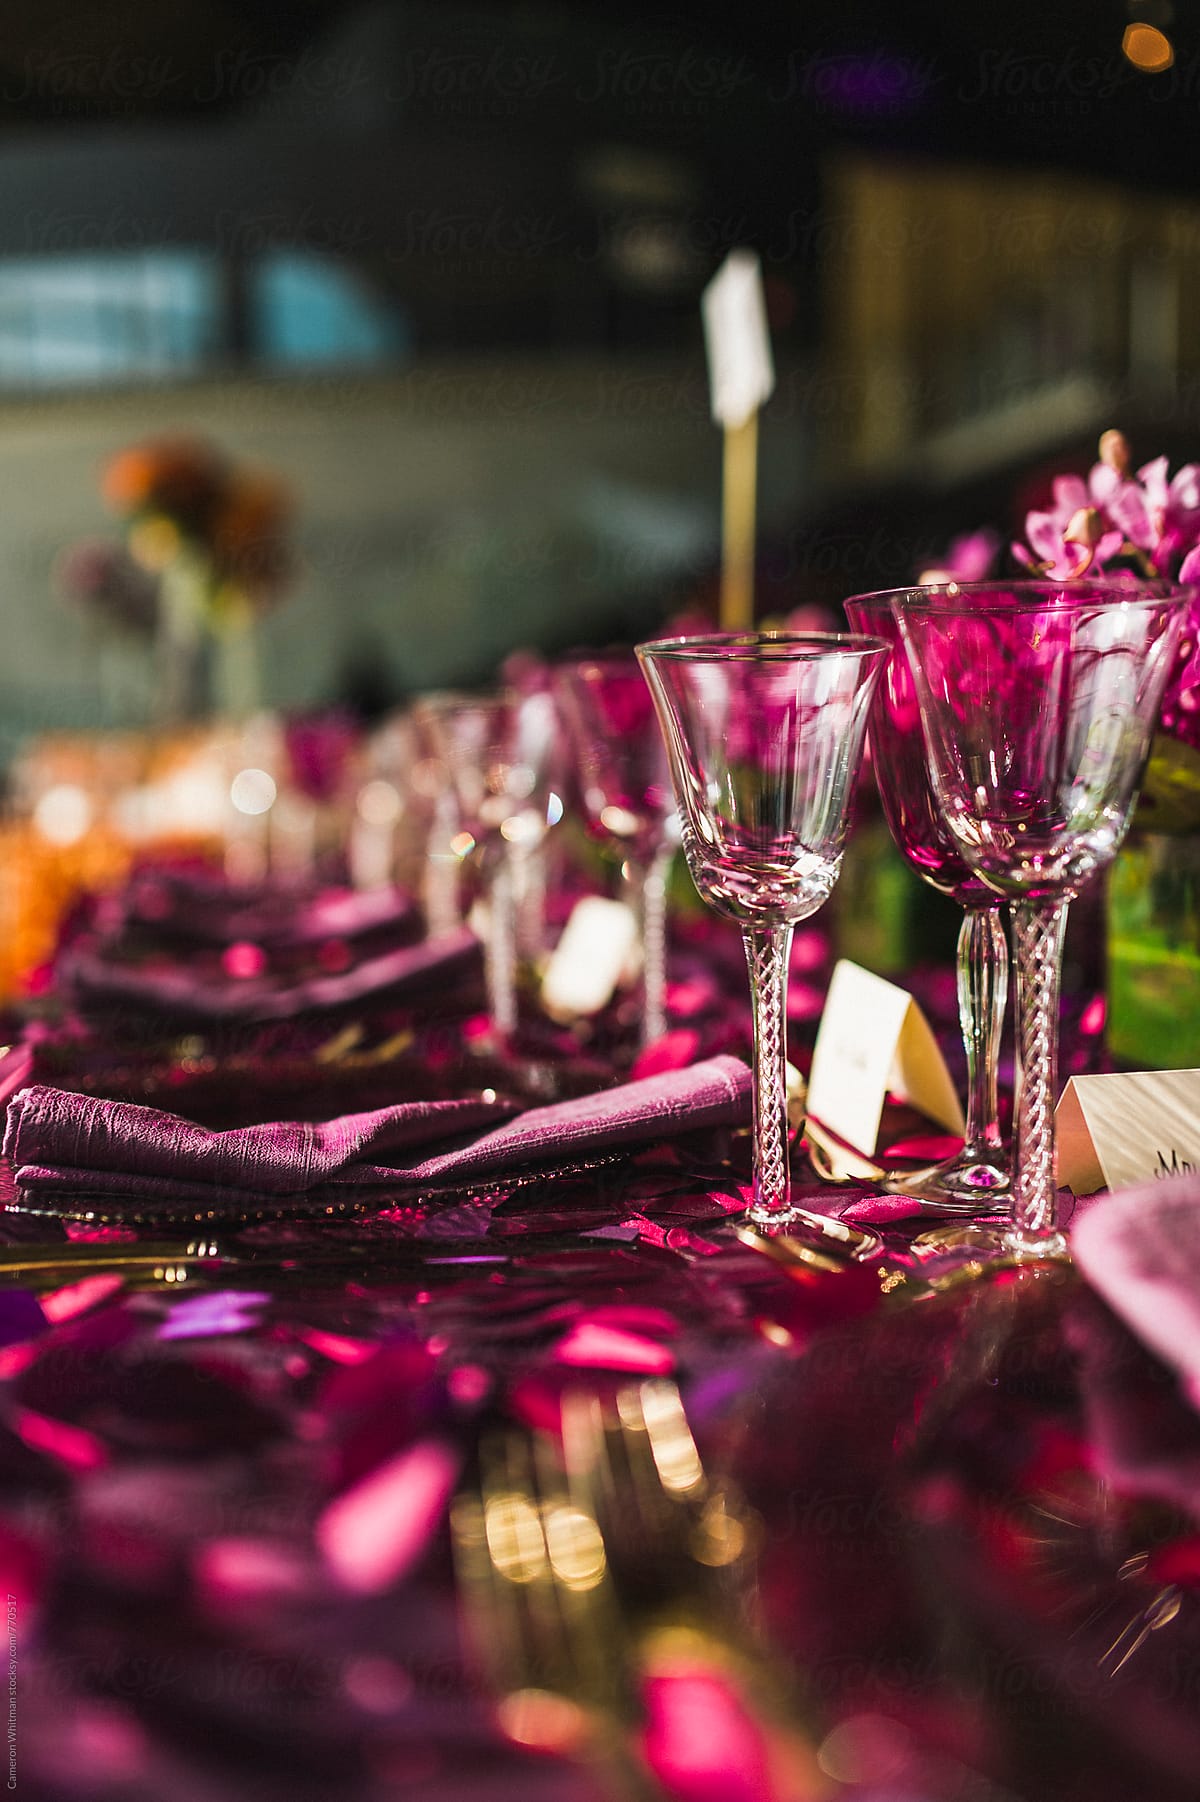 Table Setup for an elegant gala event